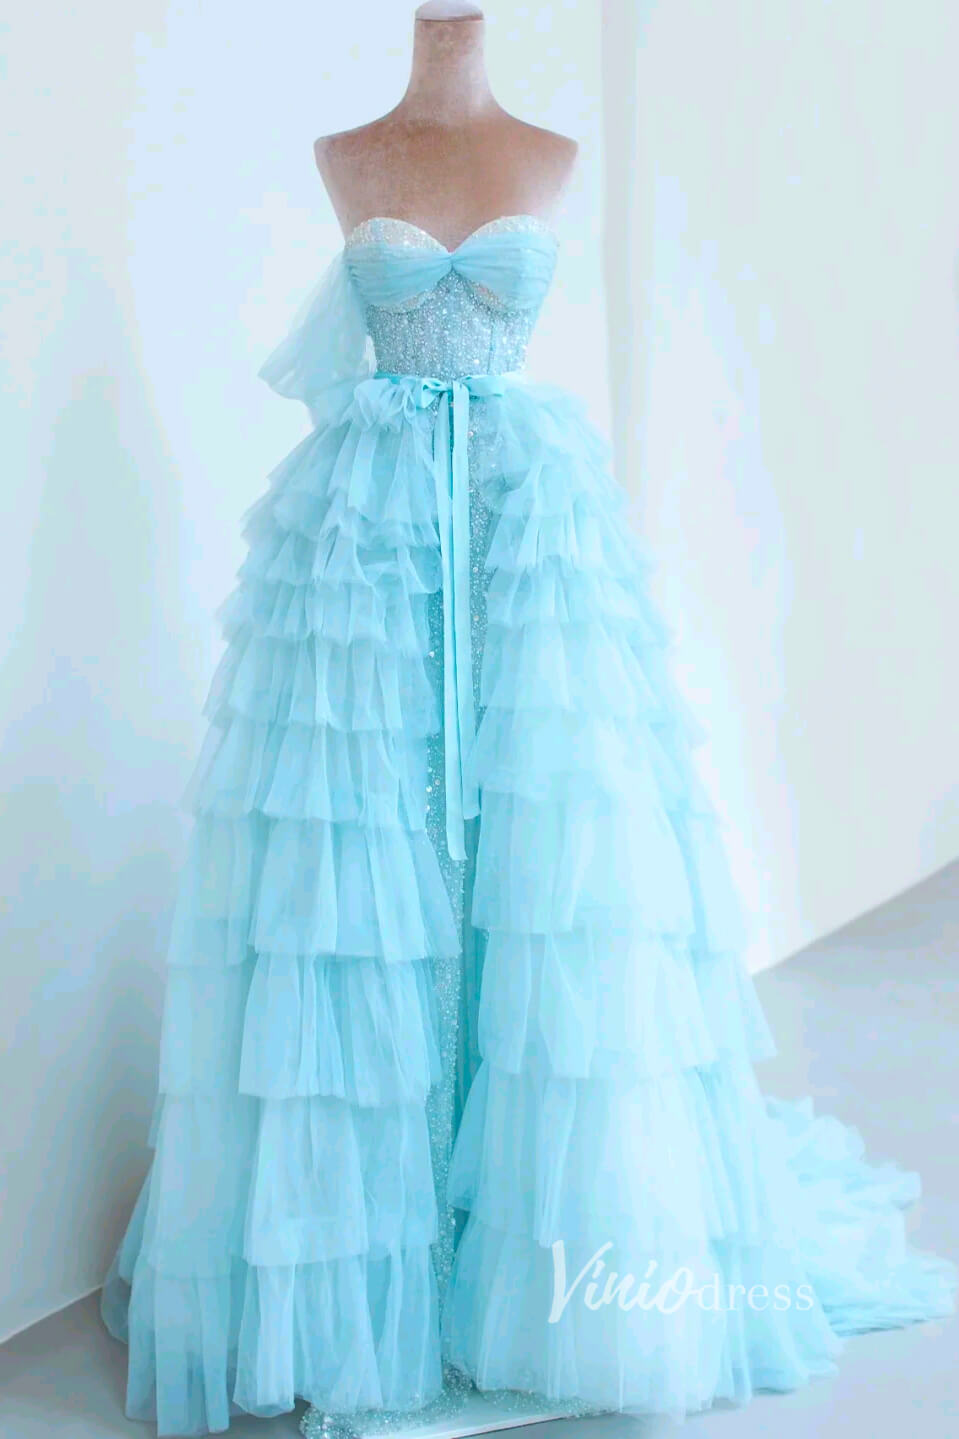 Tiffany Blue Beaded Prom Dresses Removable Ruffled Skirt Formal Gown FD3431-prom dresses-Viniodress-Viniodress